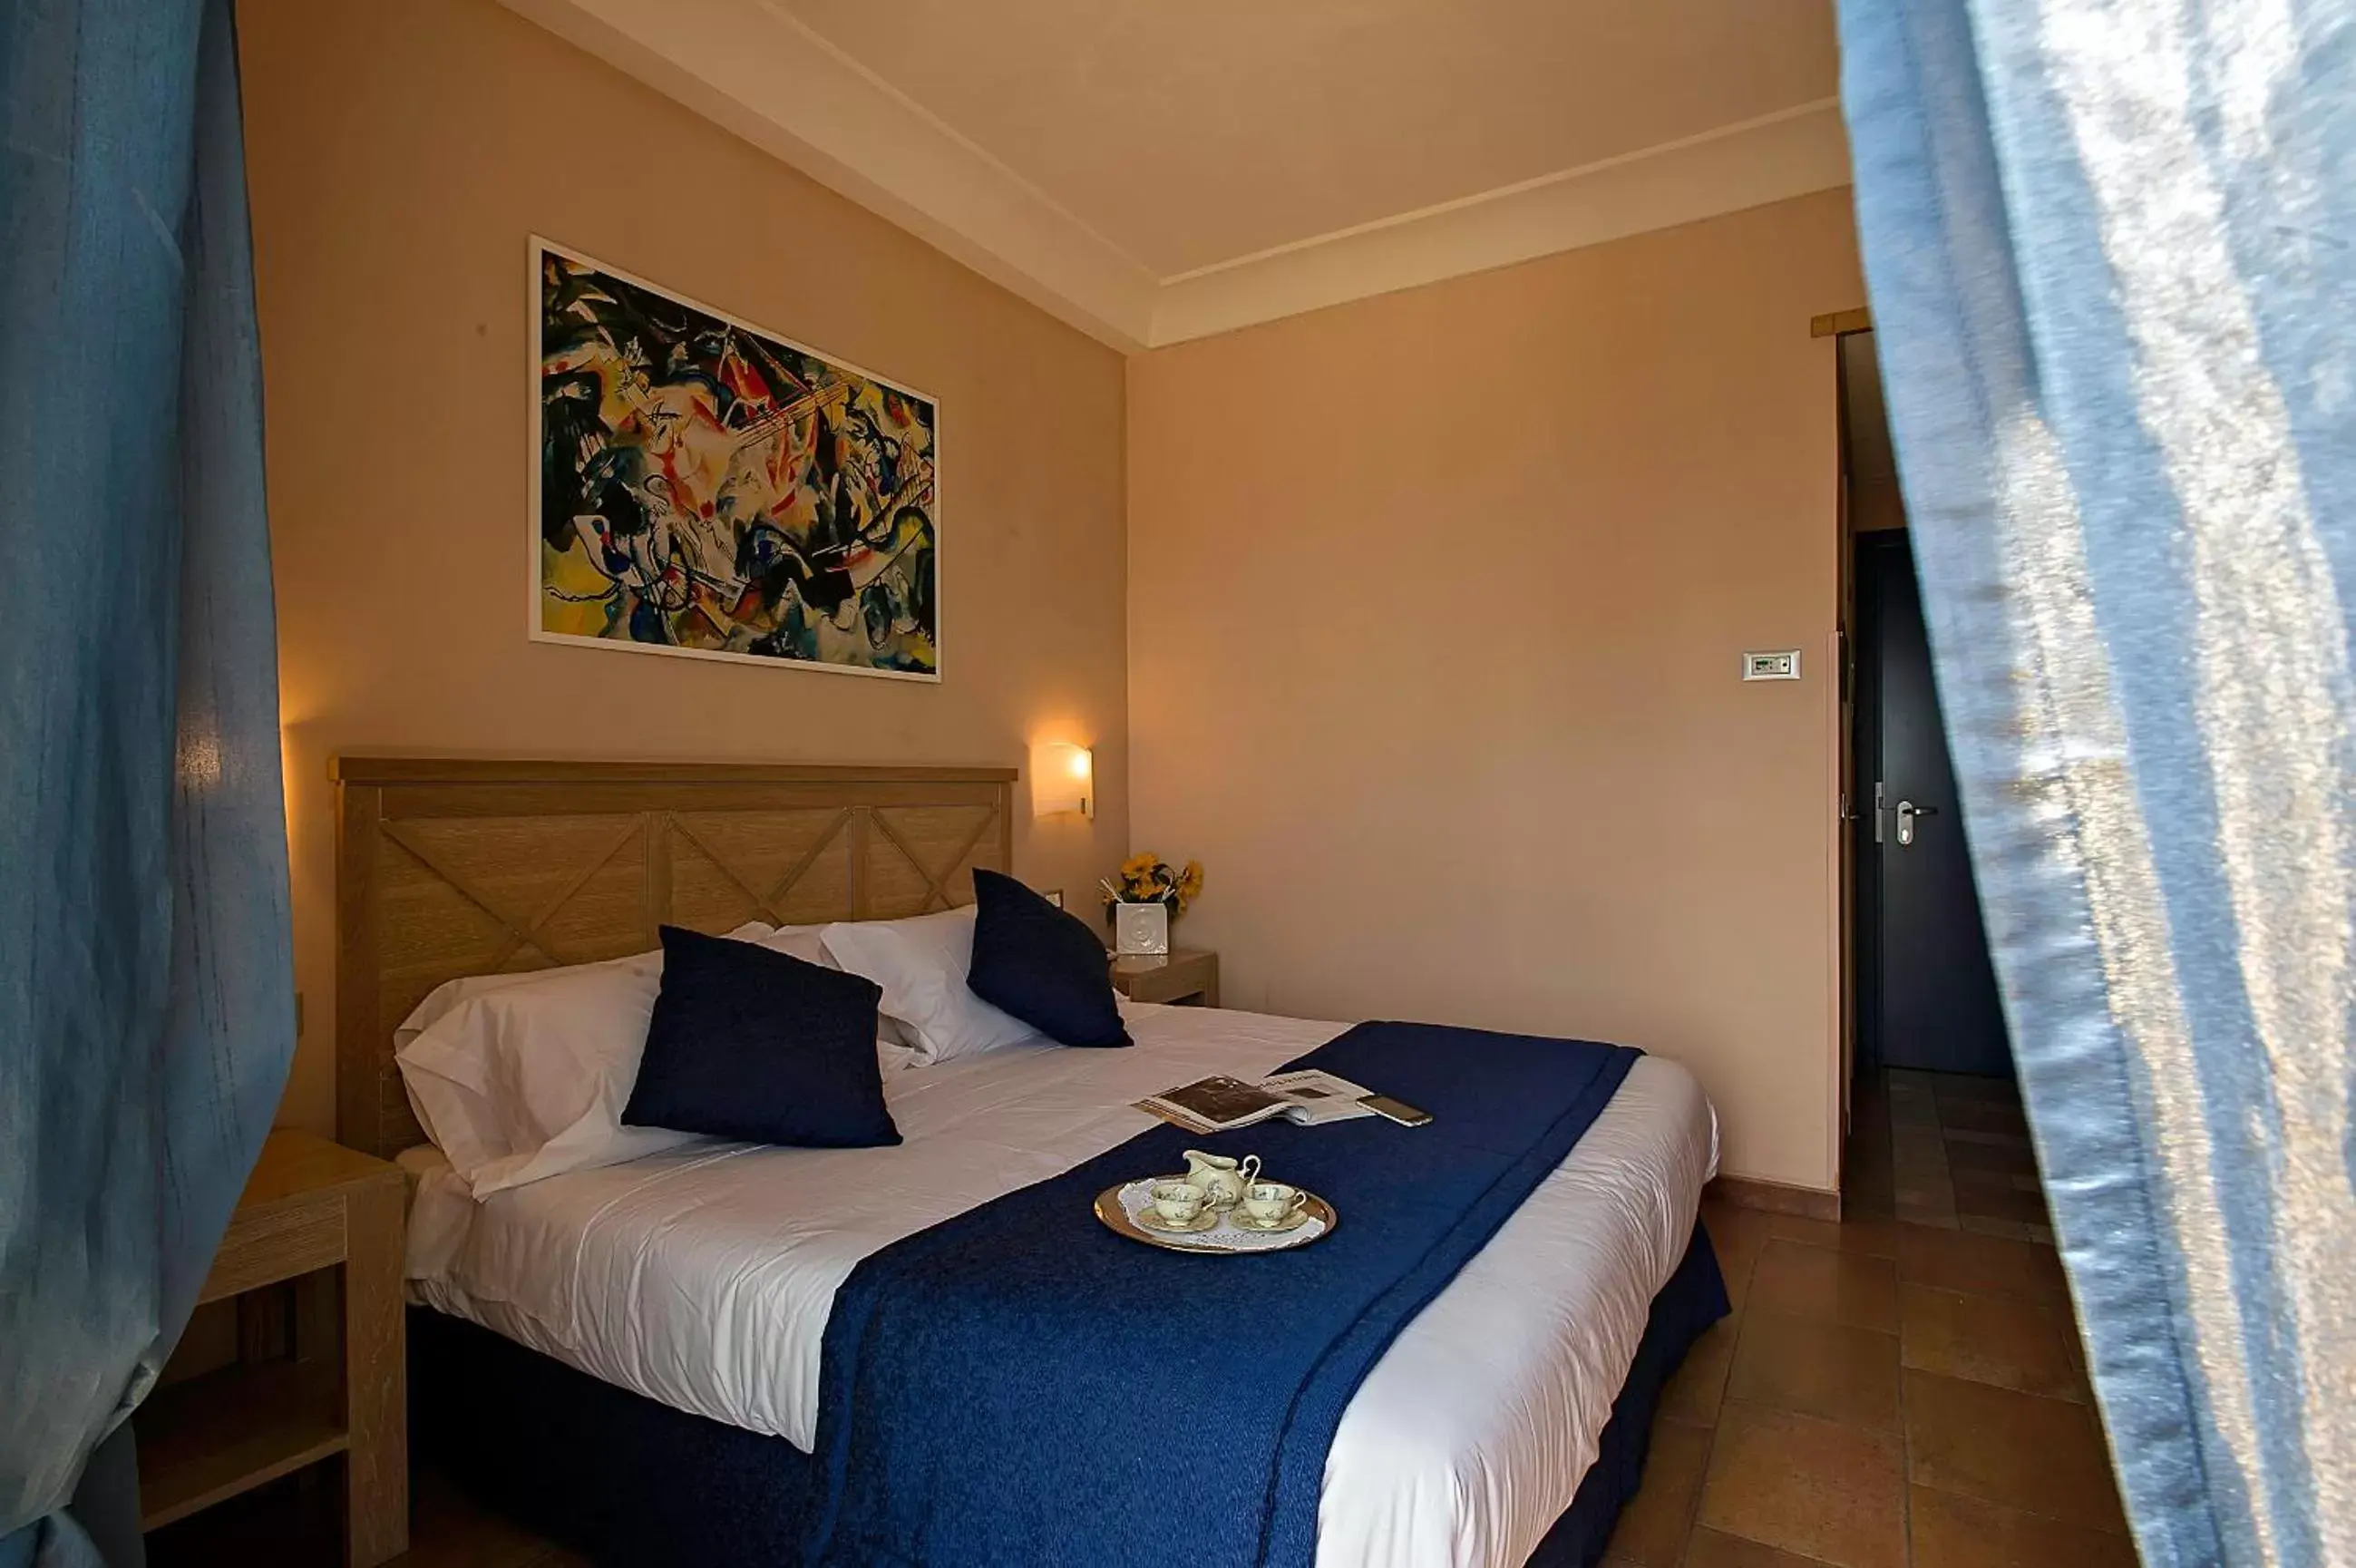 Bed, Room Photo in Mahara Hotel & Wellness